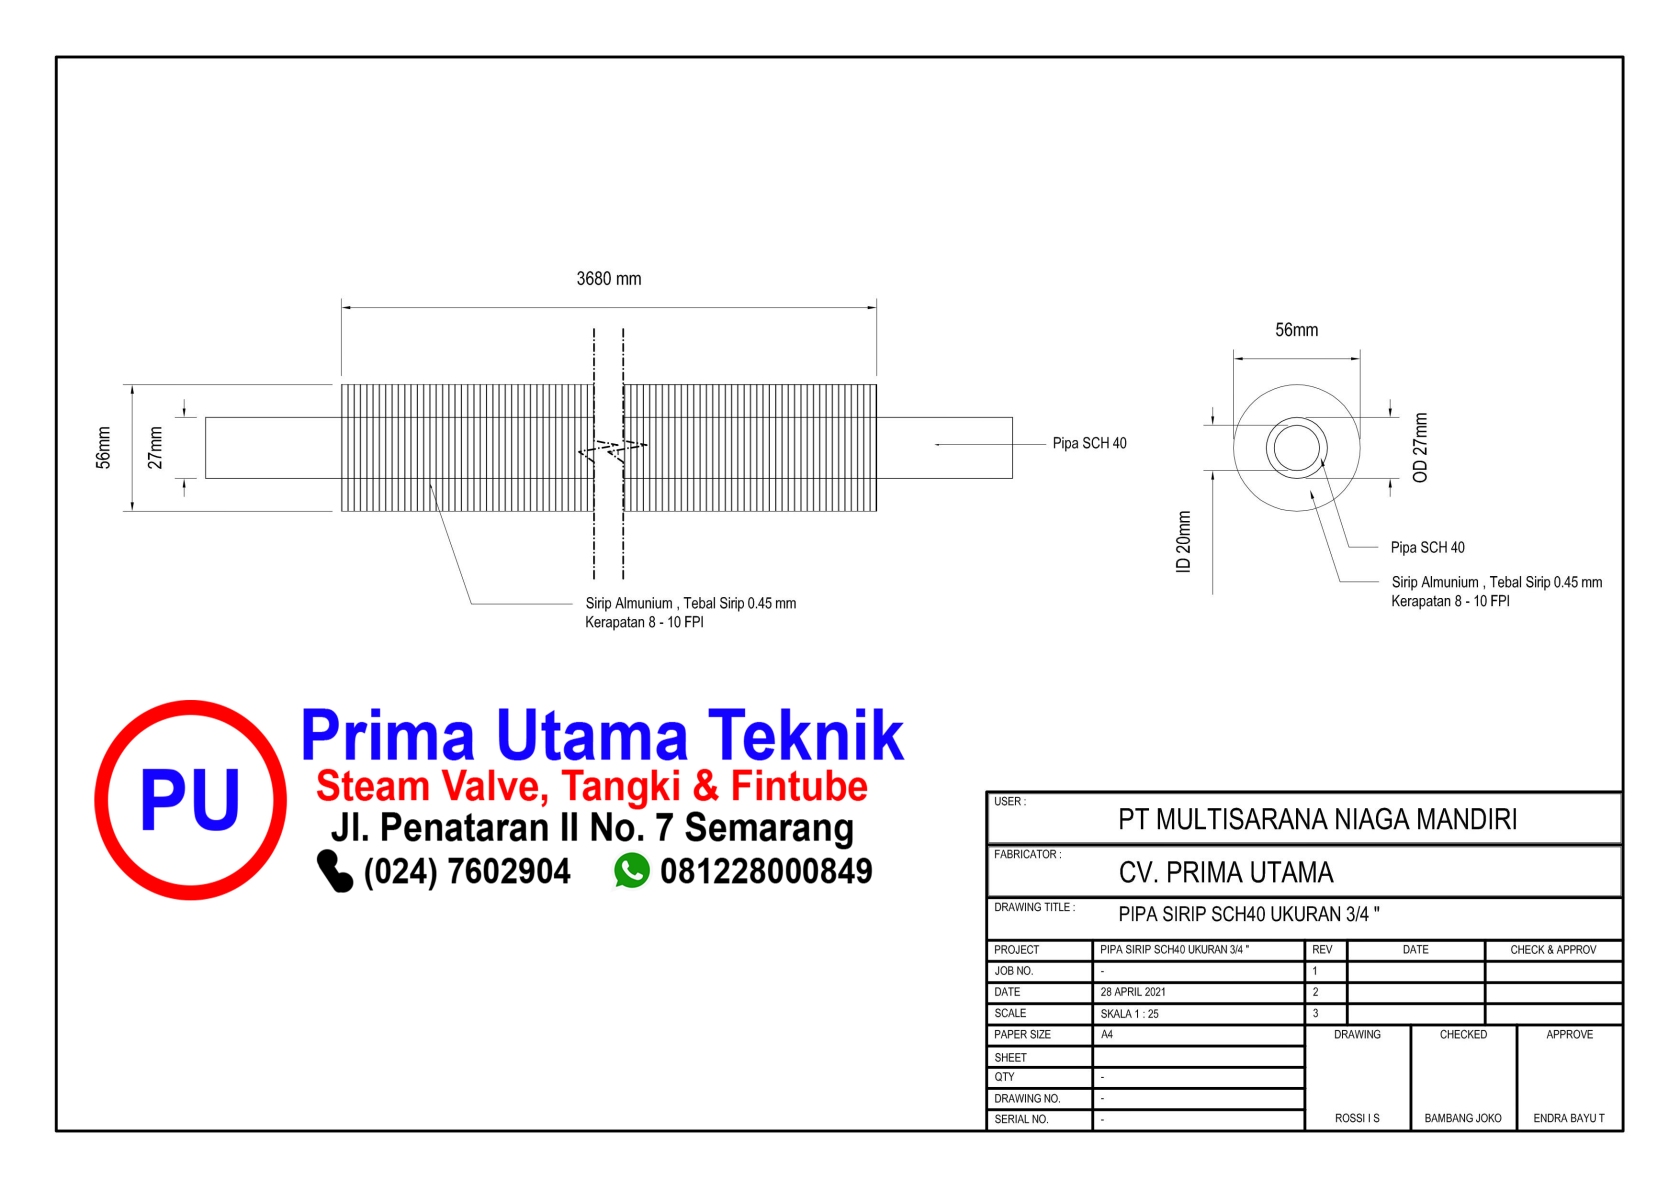 Gallery with description and a button – CV. PRIMA UTAMA